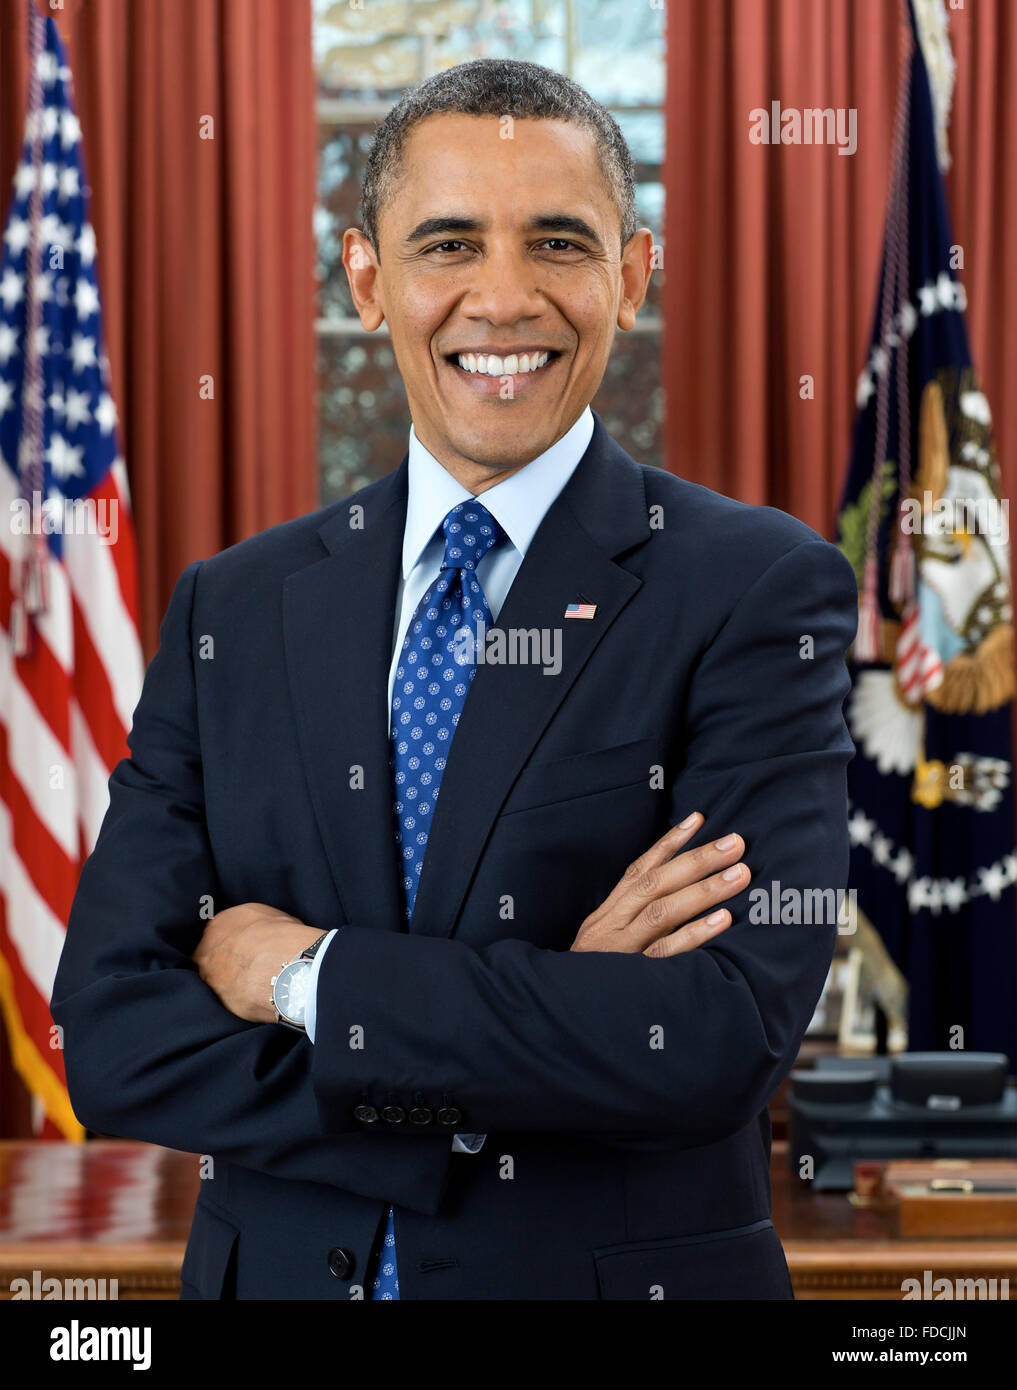 Barack Obam, Portrait. Official White House portrait of Barack Obama, the 44th President of the USA, December 2012 Stock Photo